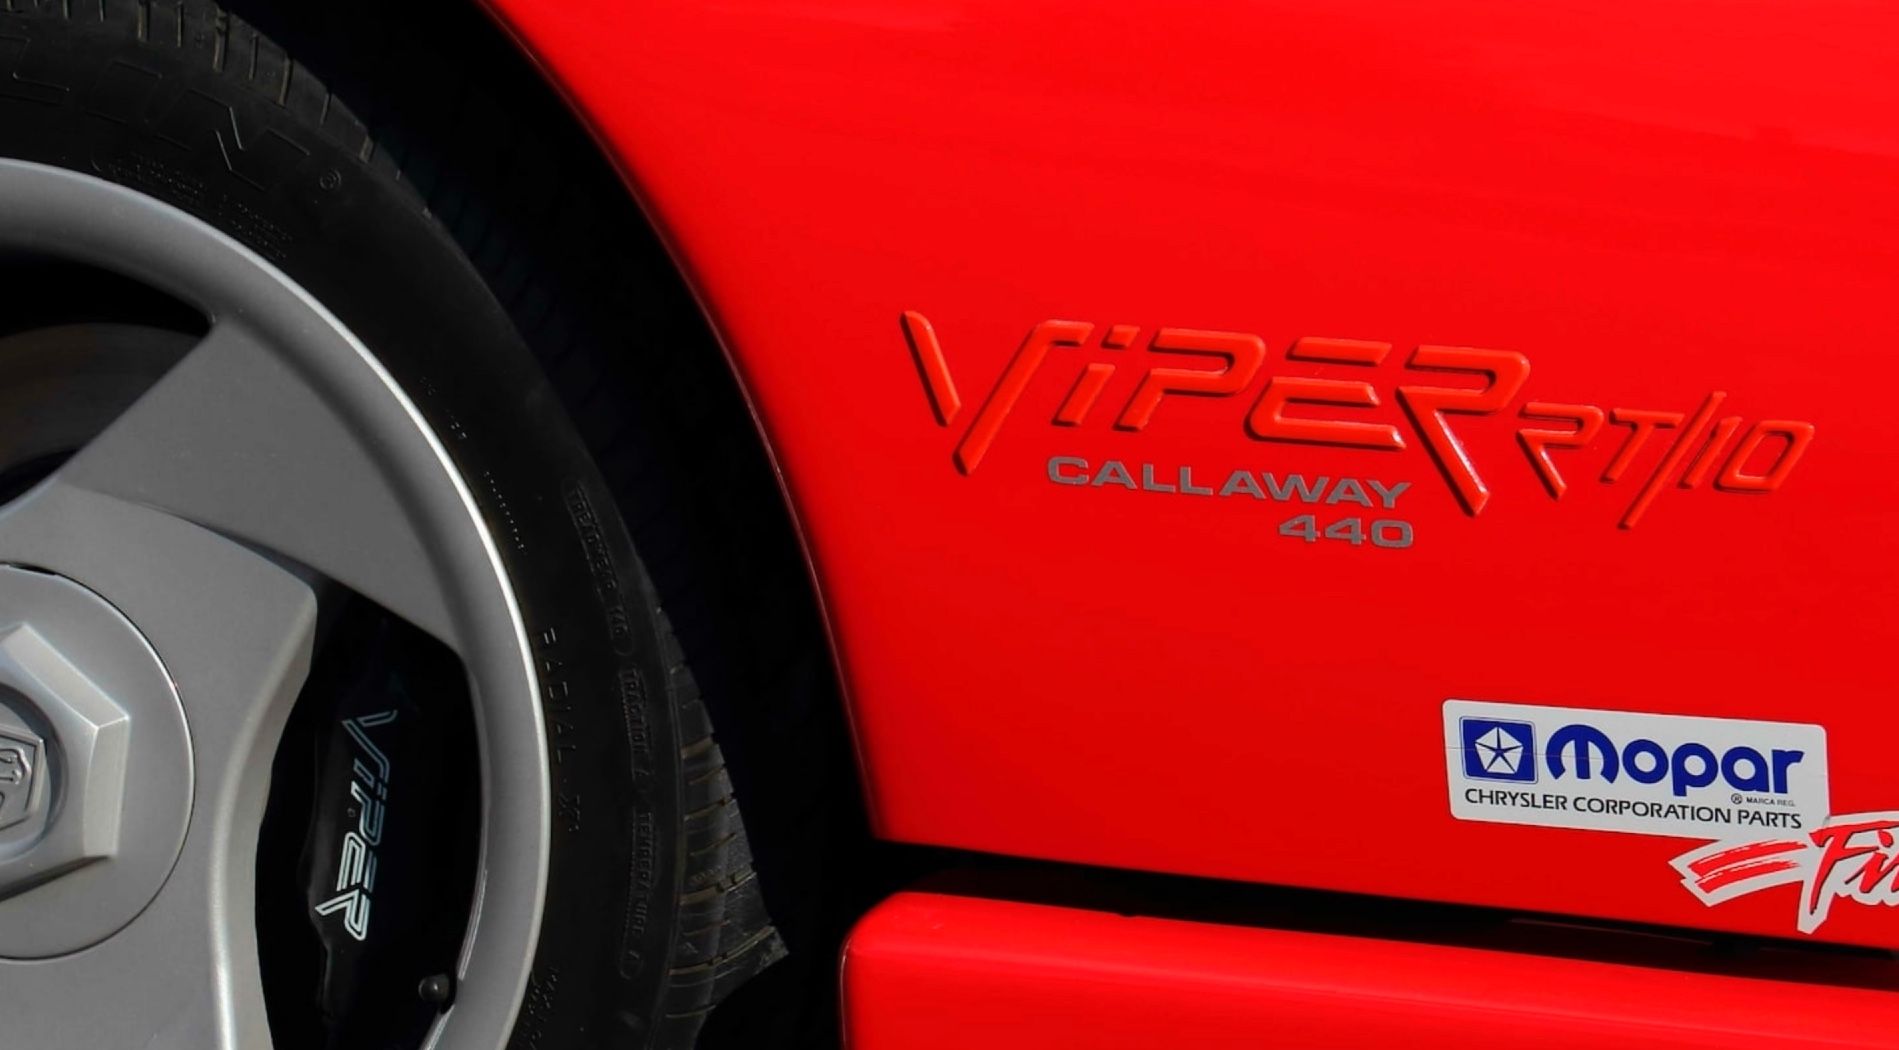 Red 1993 Dodge Viper RT/10 Callaway 440 Pace Car